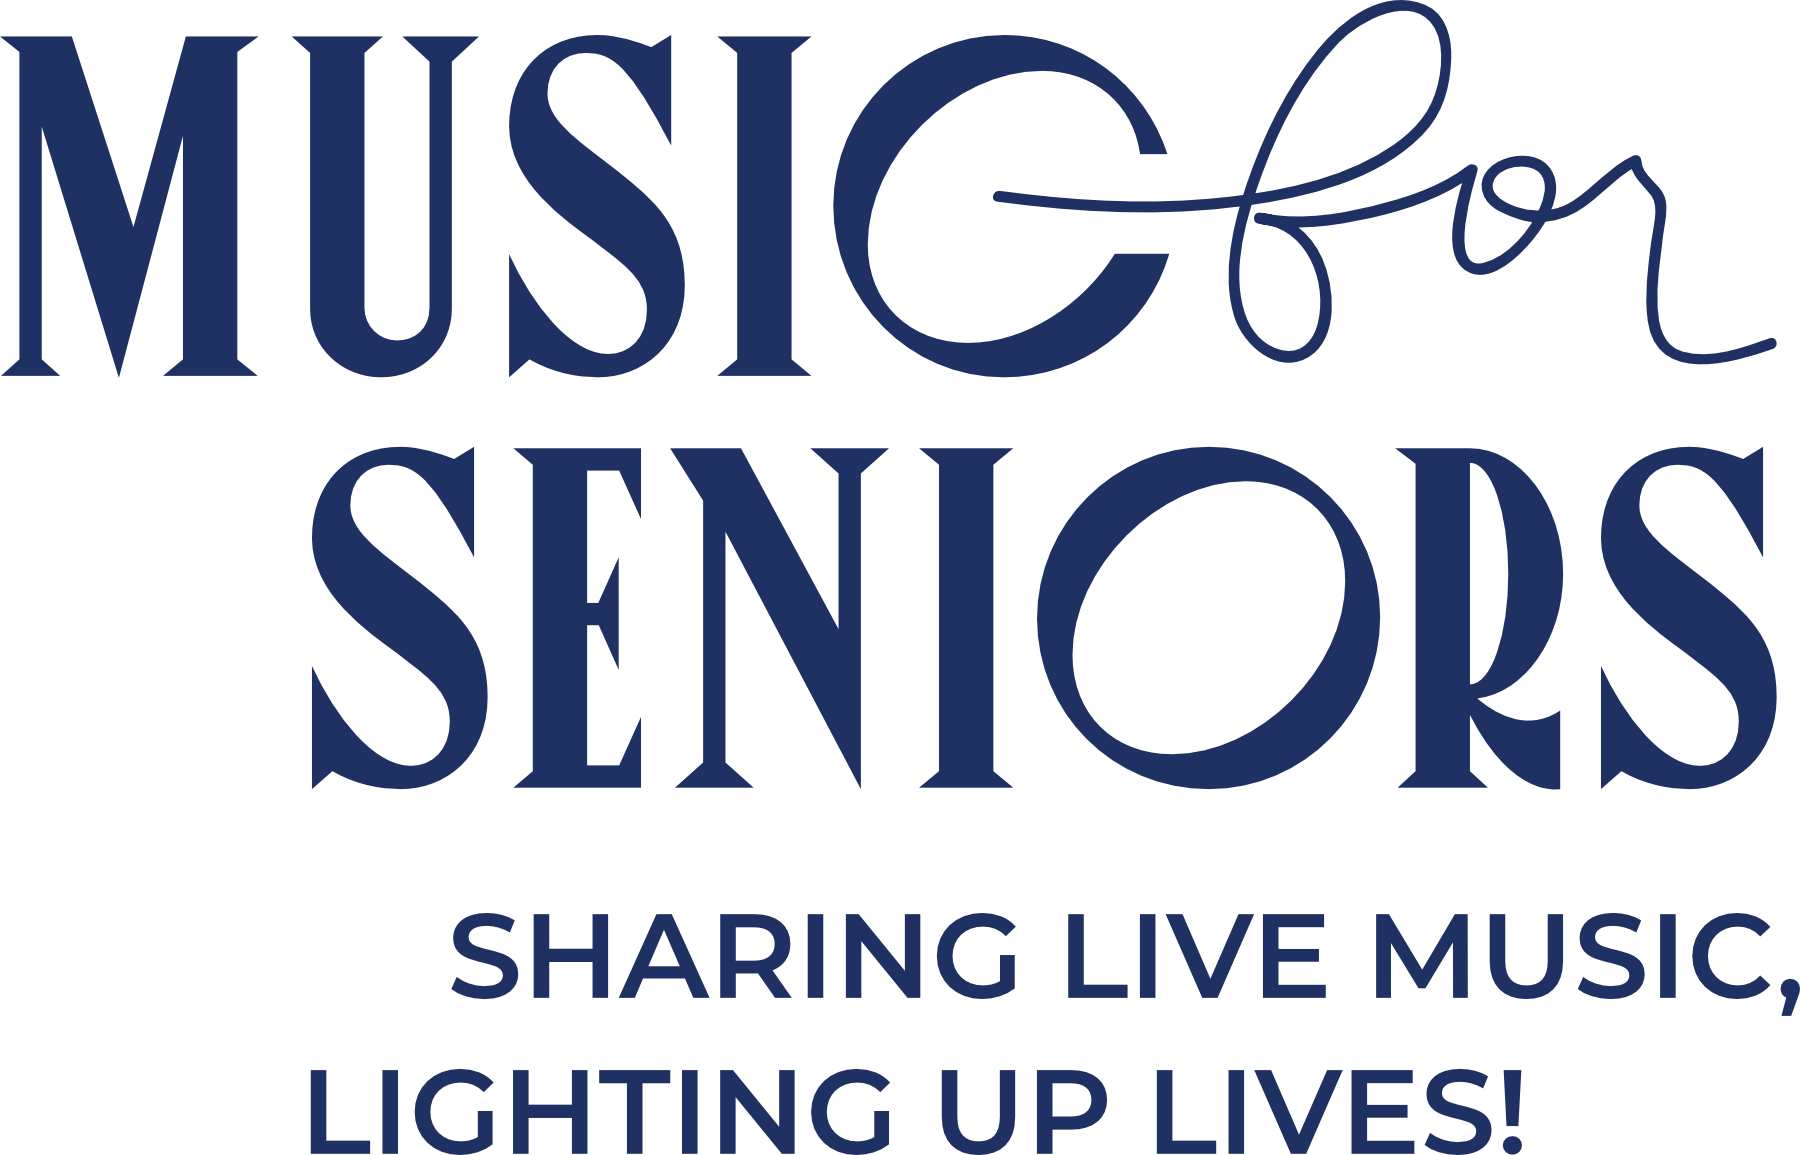 2023 musicforseniors-logo-tagline-dark blue-123063.png